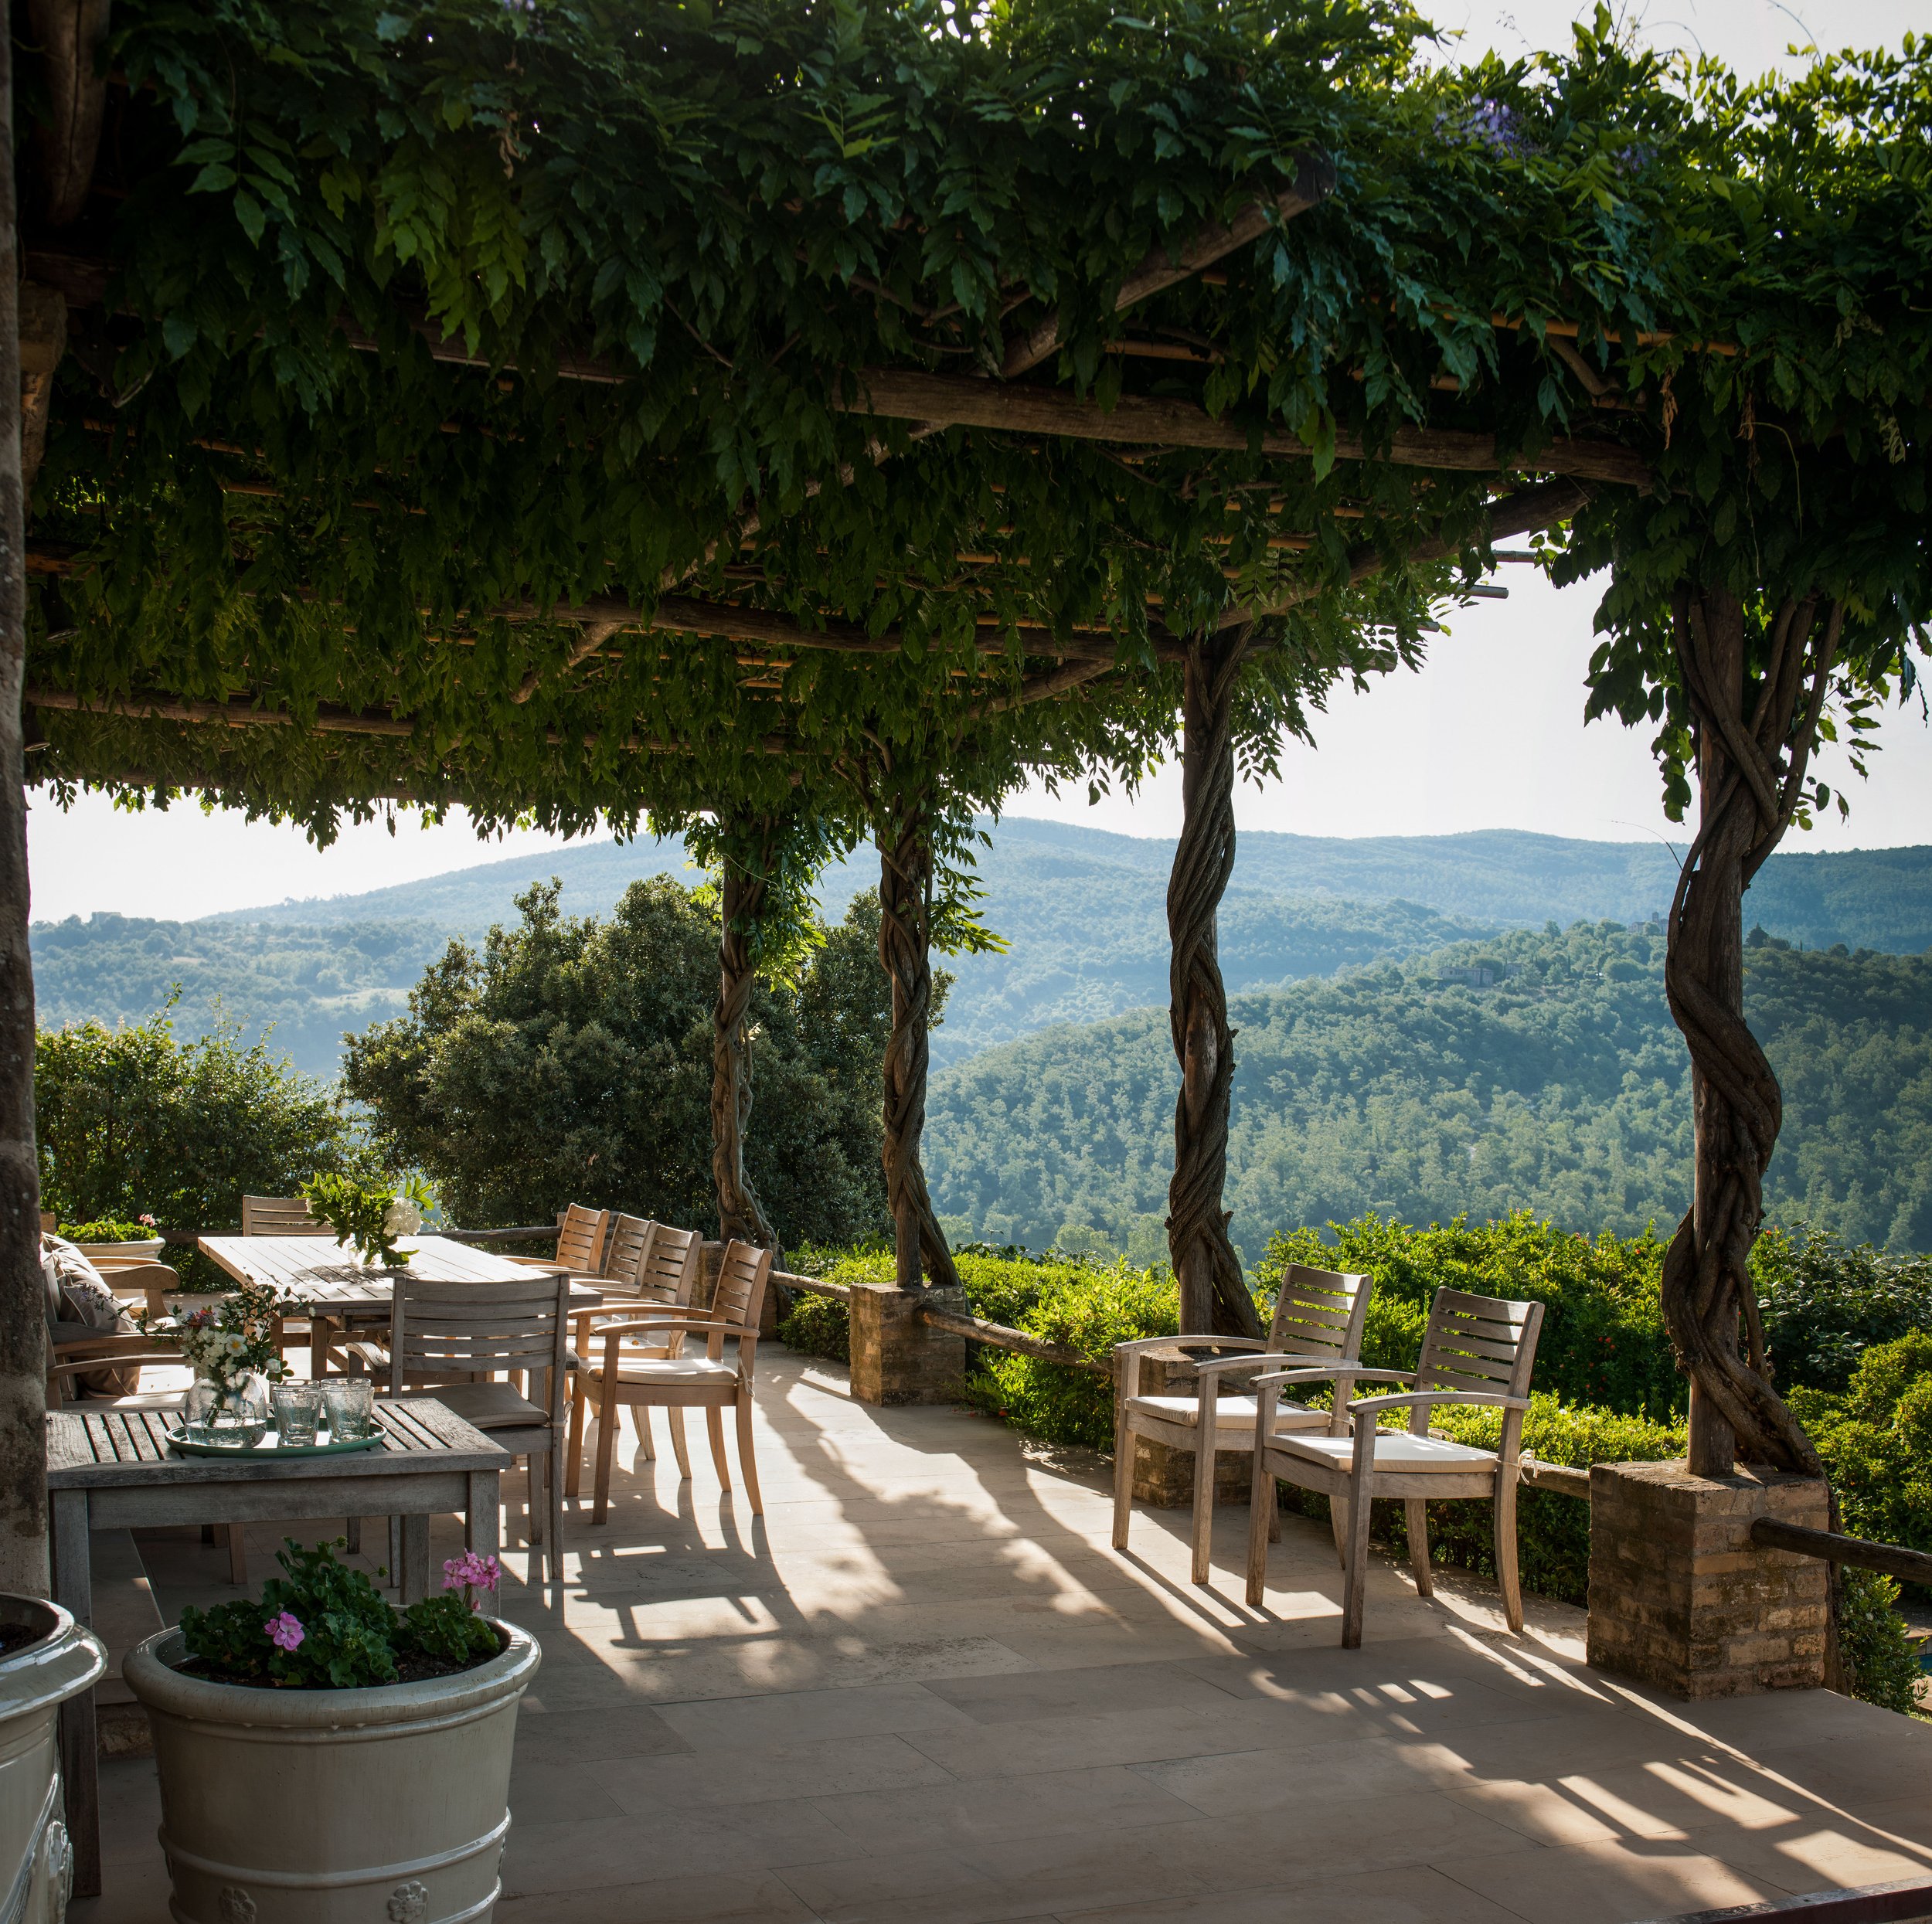 Francis York Exclusive Luxury Villa Rental in Umbria, Italy 10.jpg